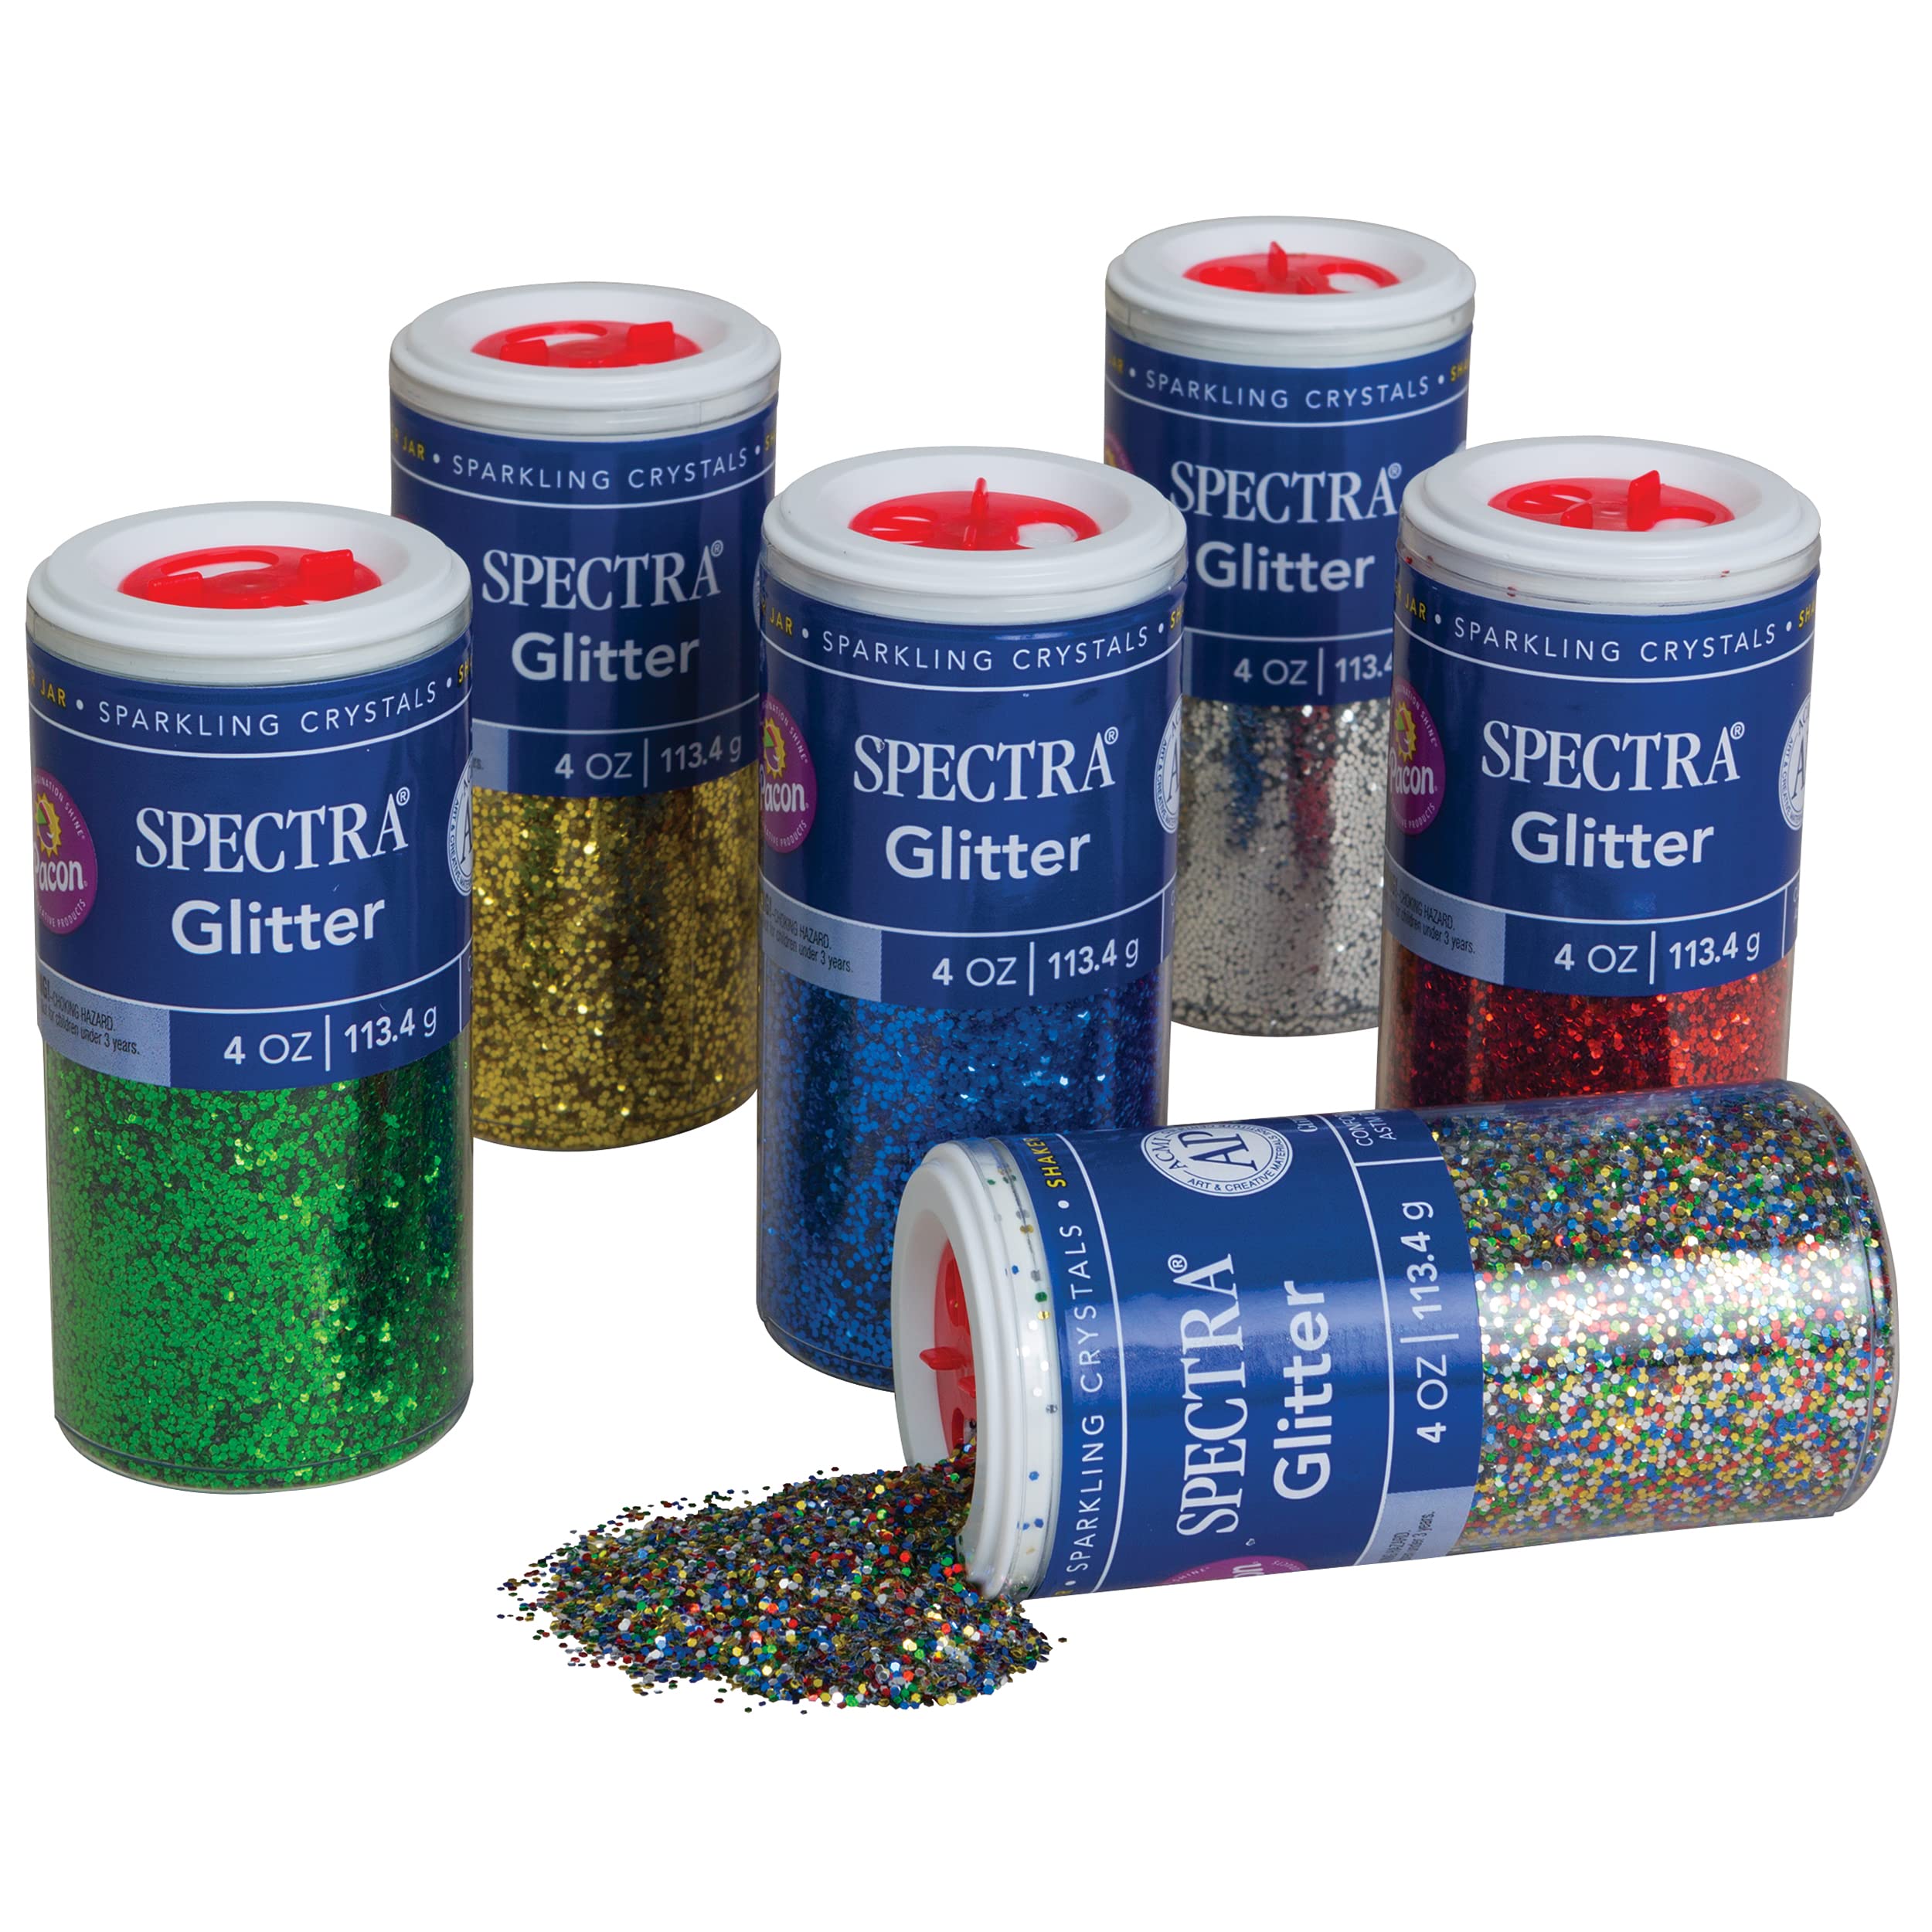 Spectra Arts & Crafts Glitter Assortment, 6 Assorted Colors, 4 oz., 6 Jars